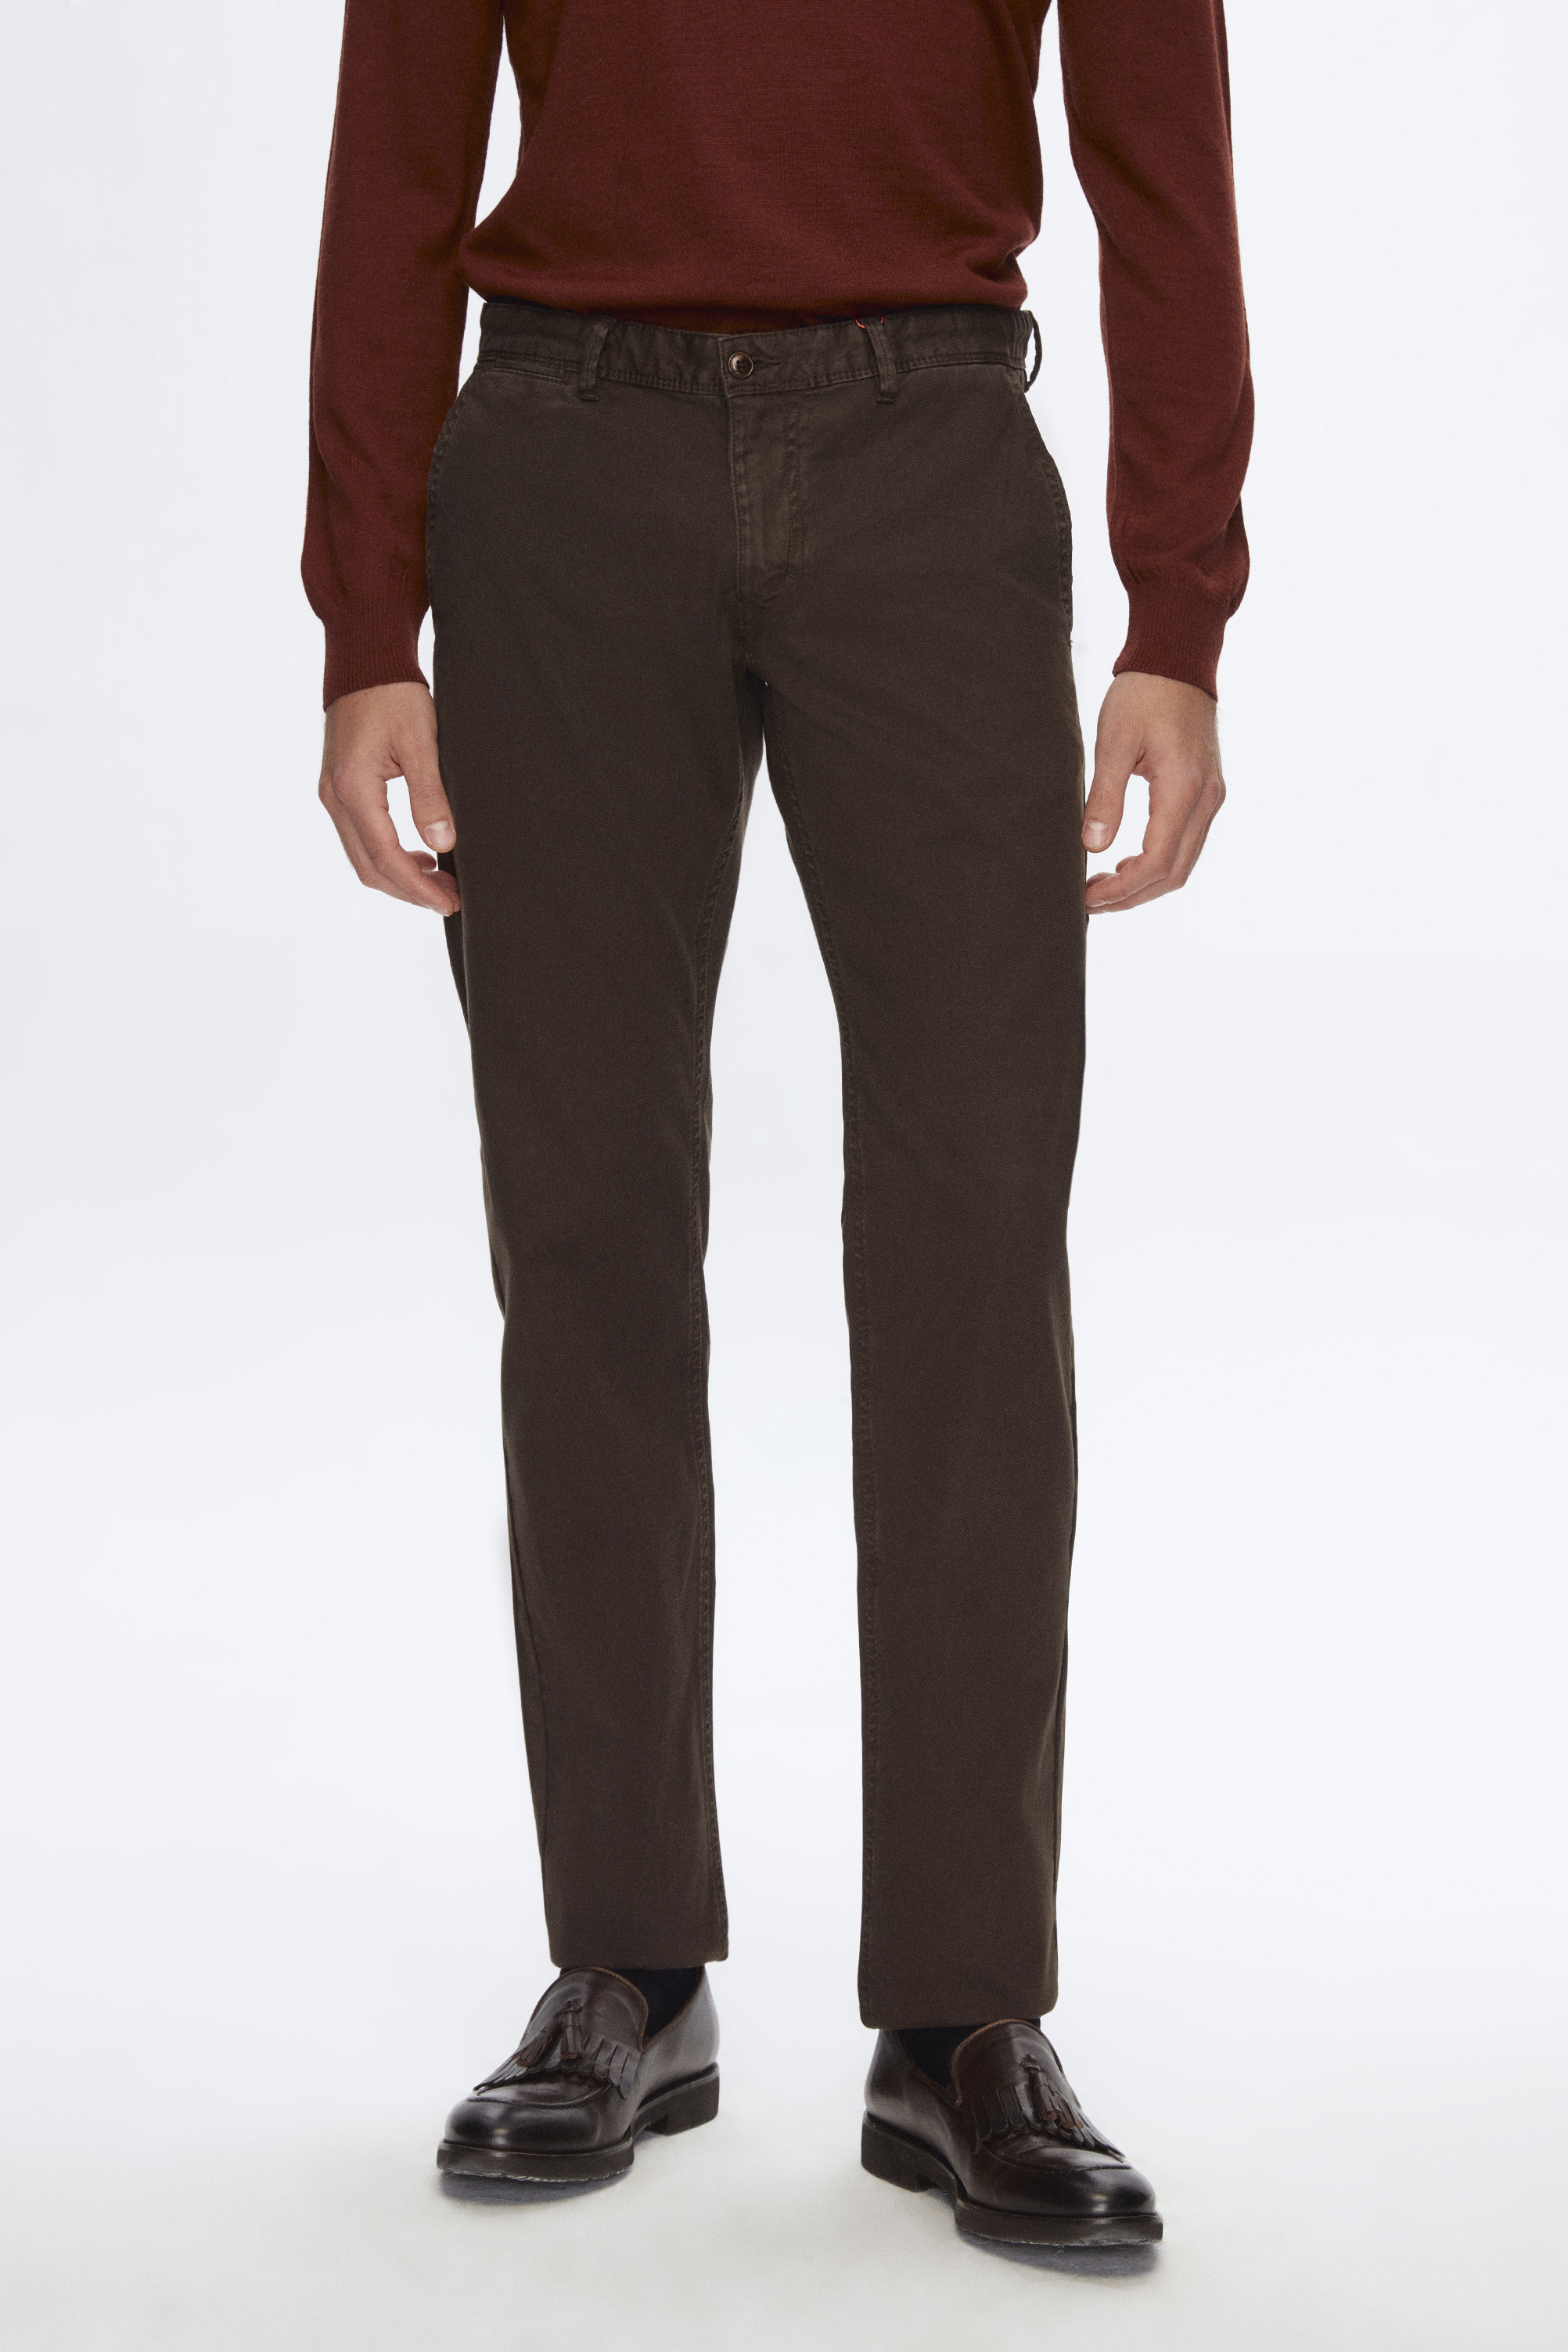 Damat Tween Damat Slim Fit Kahverengi Düz Chino Pantolon. 1